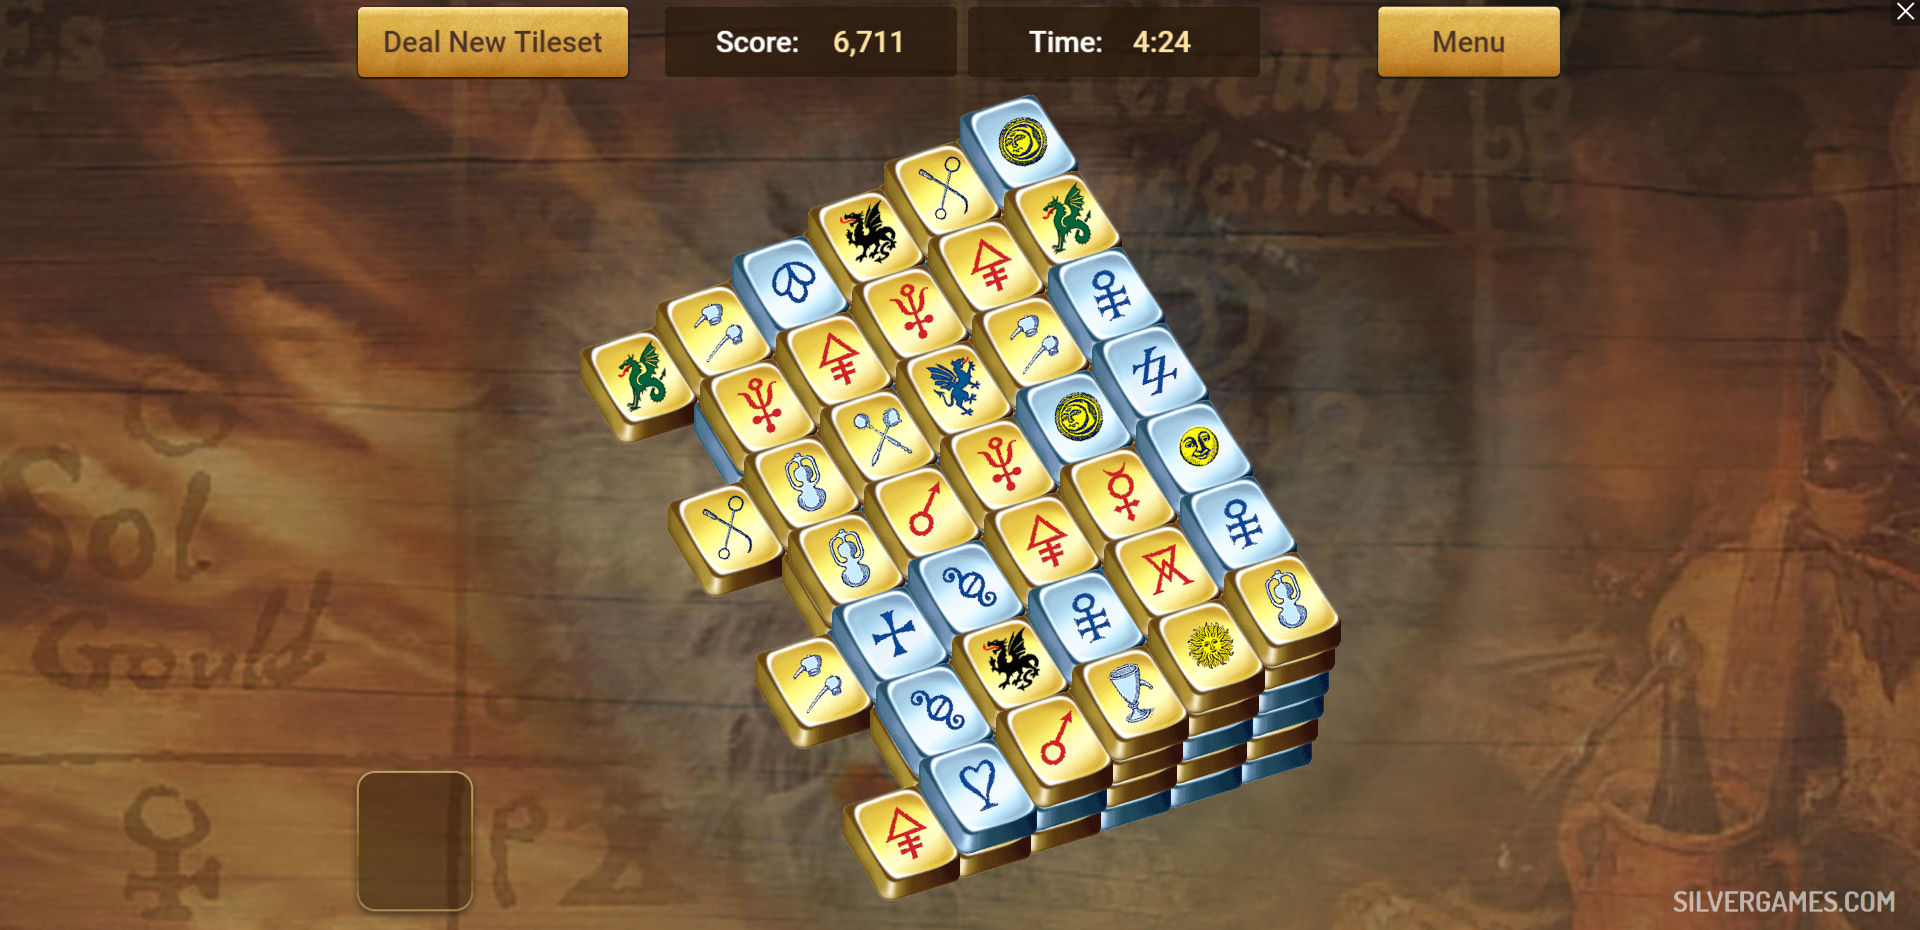 Mahjongg: Alchemy 🕹️ Jogue no Jogos123